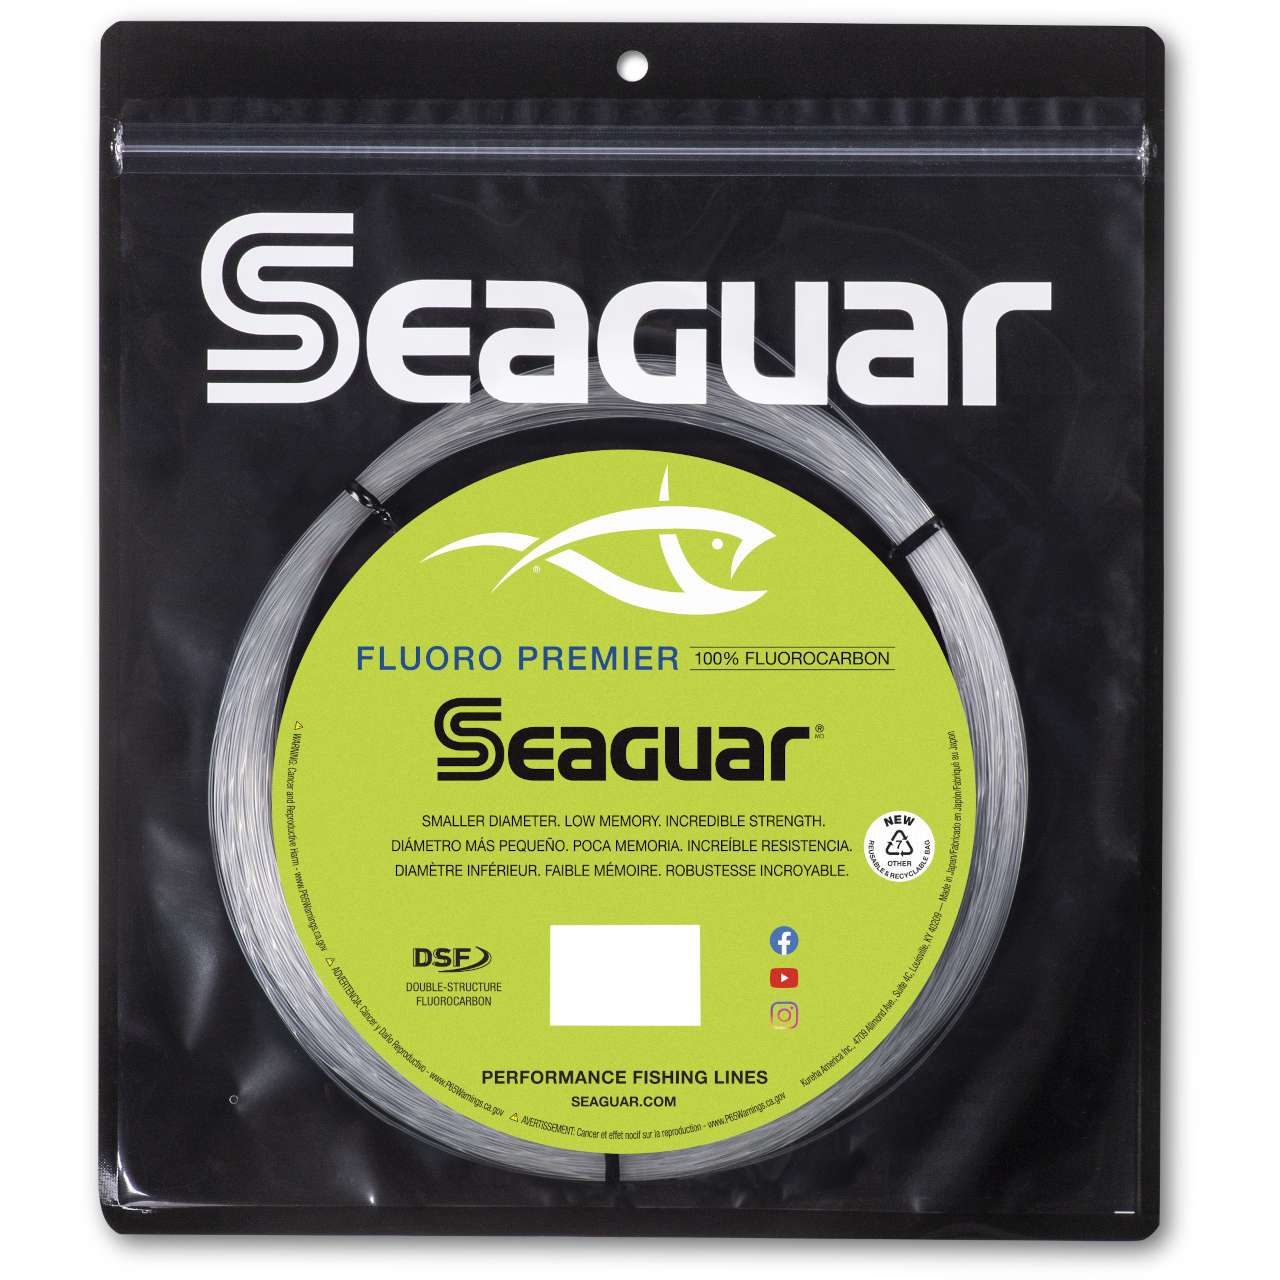 Seaguar Blue Label Fishing Line 100 25lb